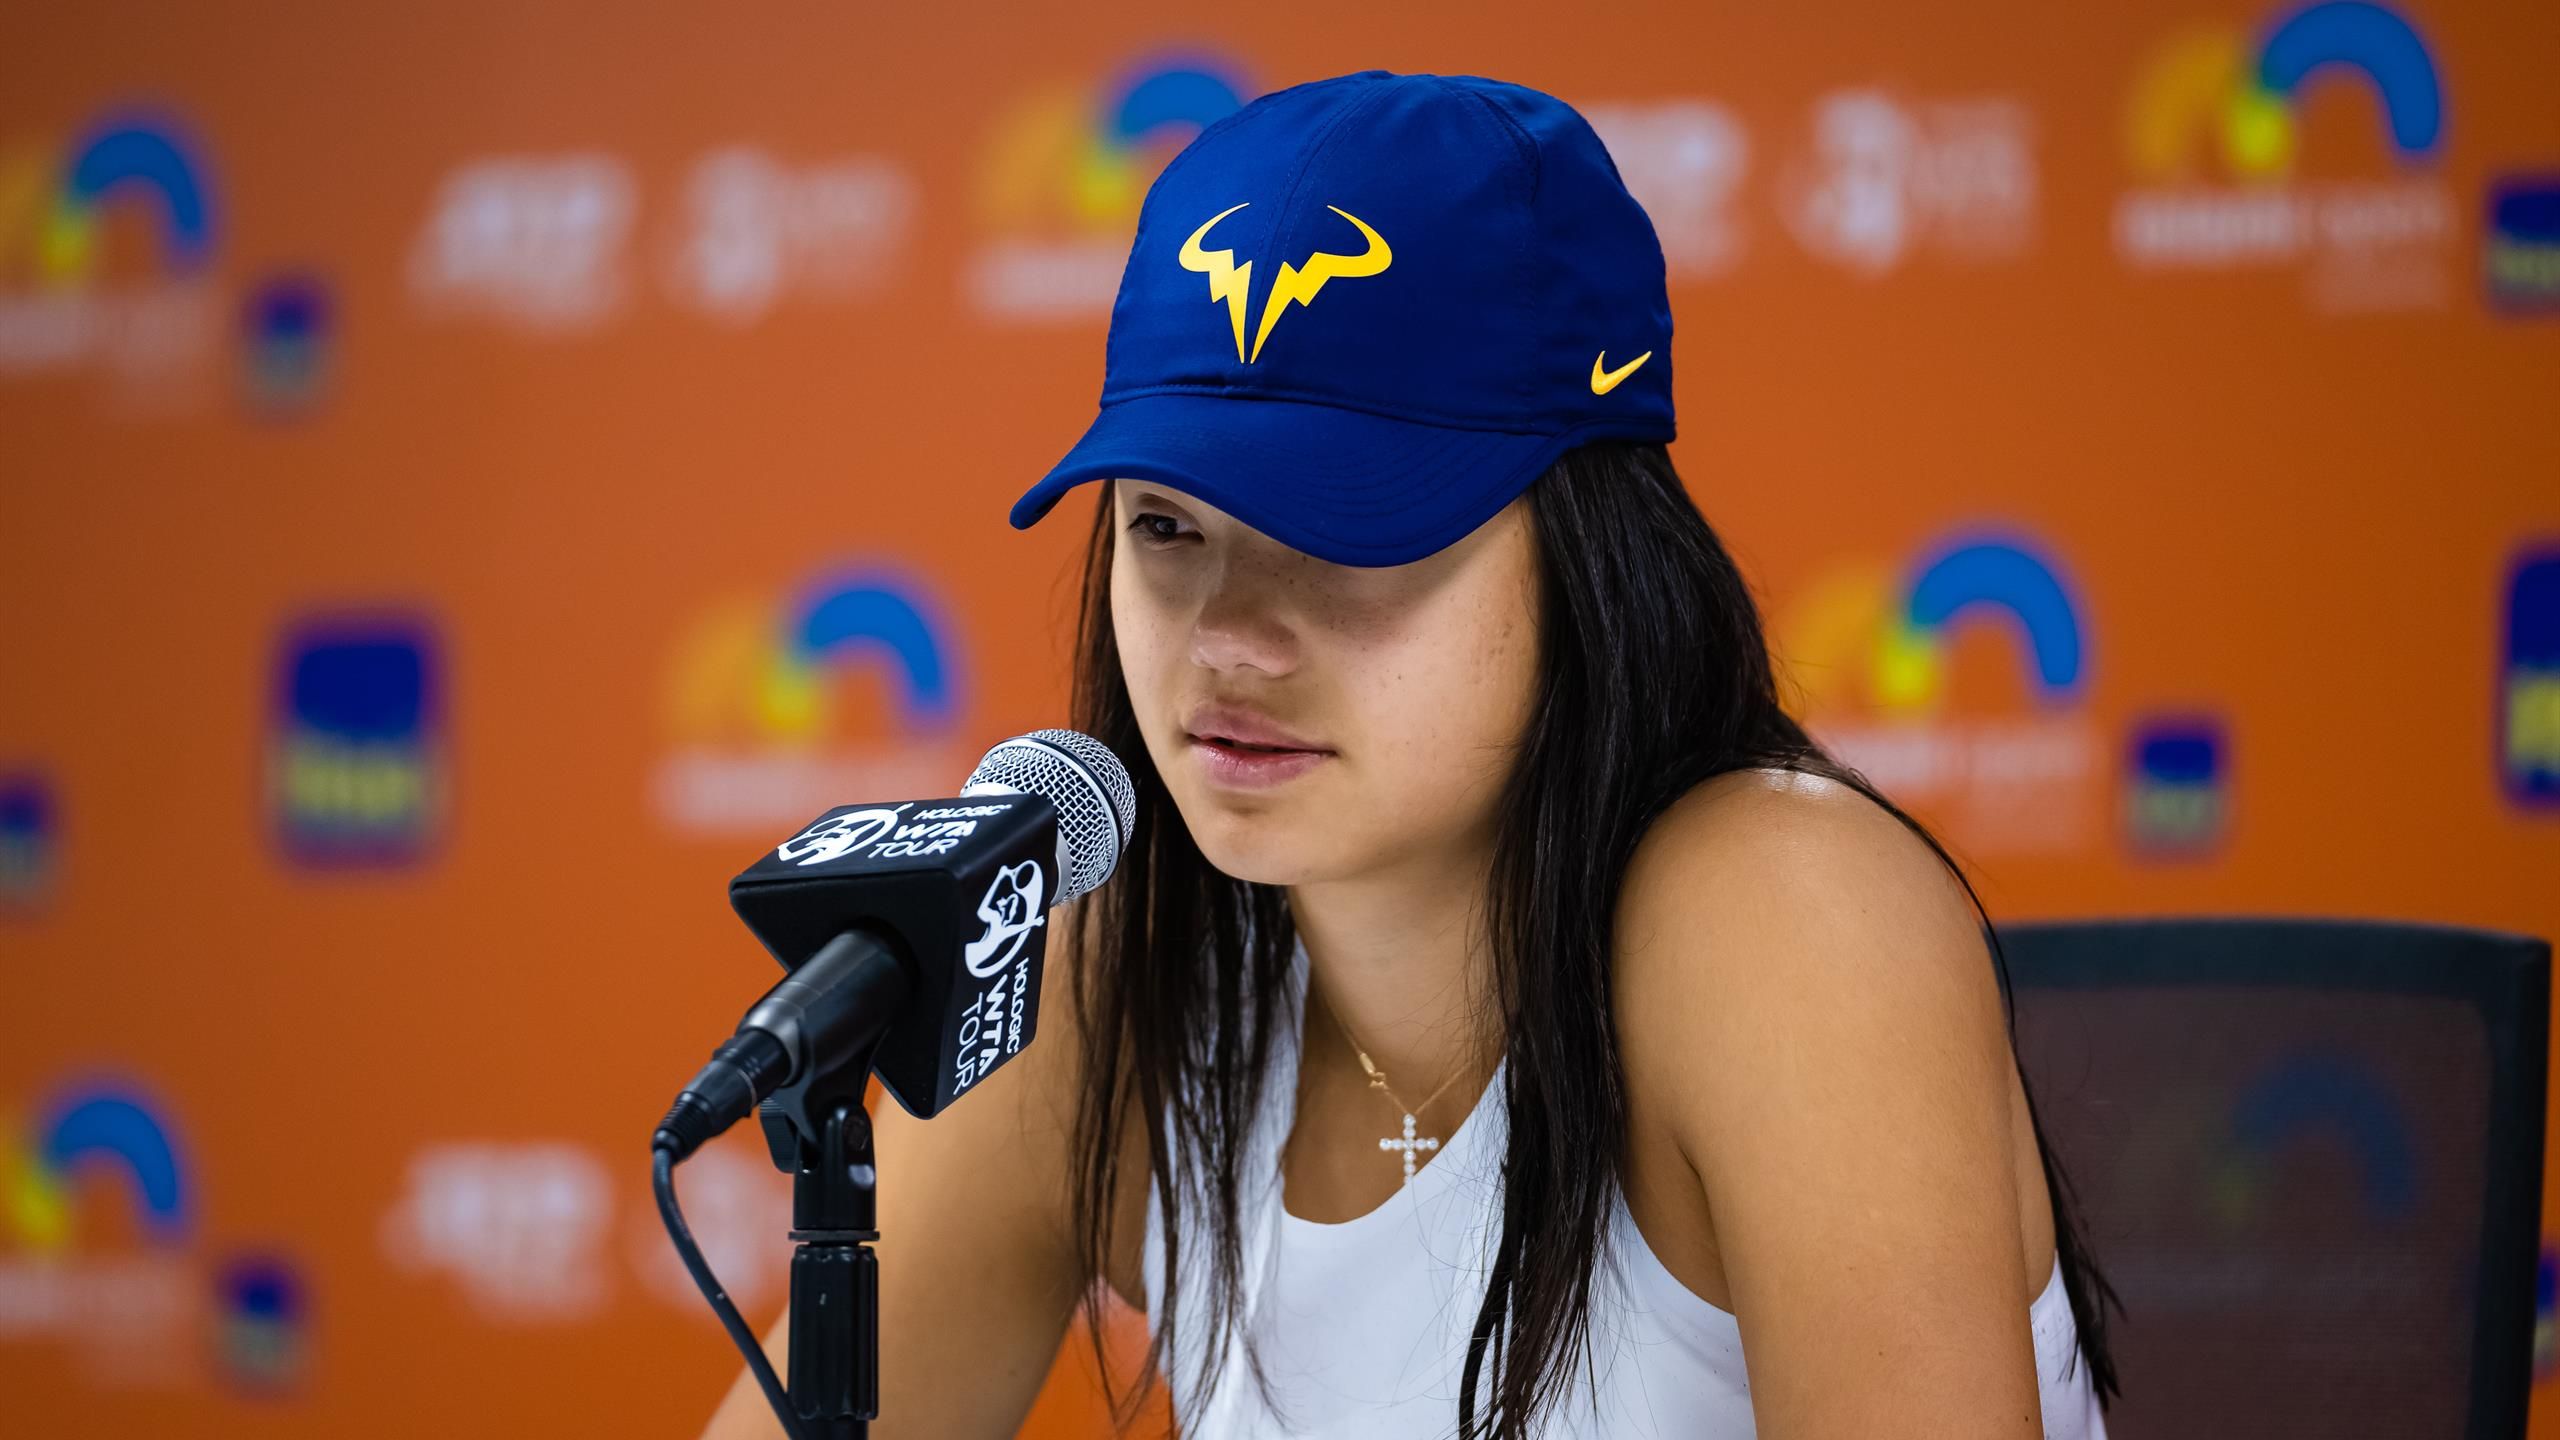 Tenis | Raducanu, la reina de publicidad que luce las gorras... ¡de Rafa - Eurosport